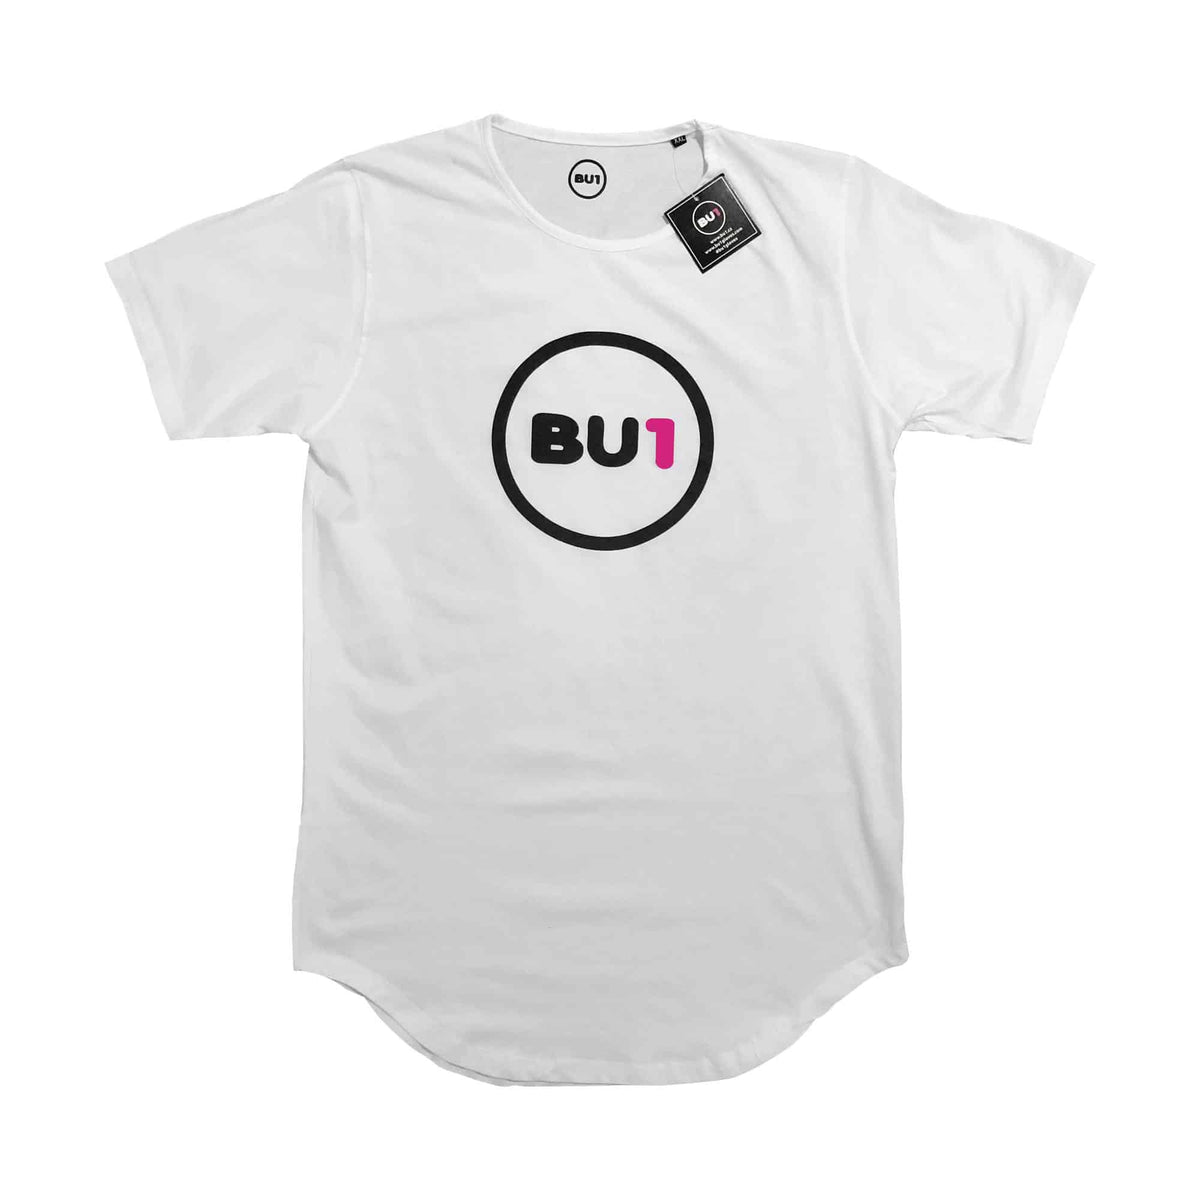 BU1 T-shirt white